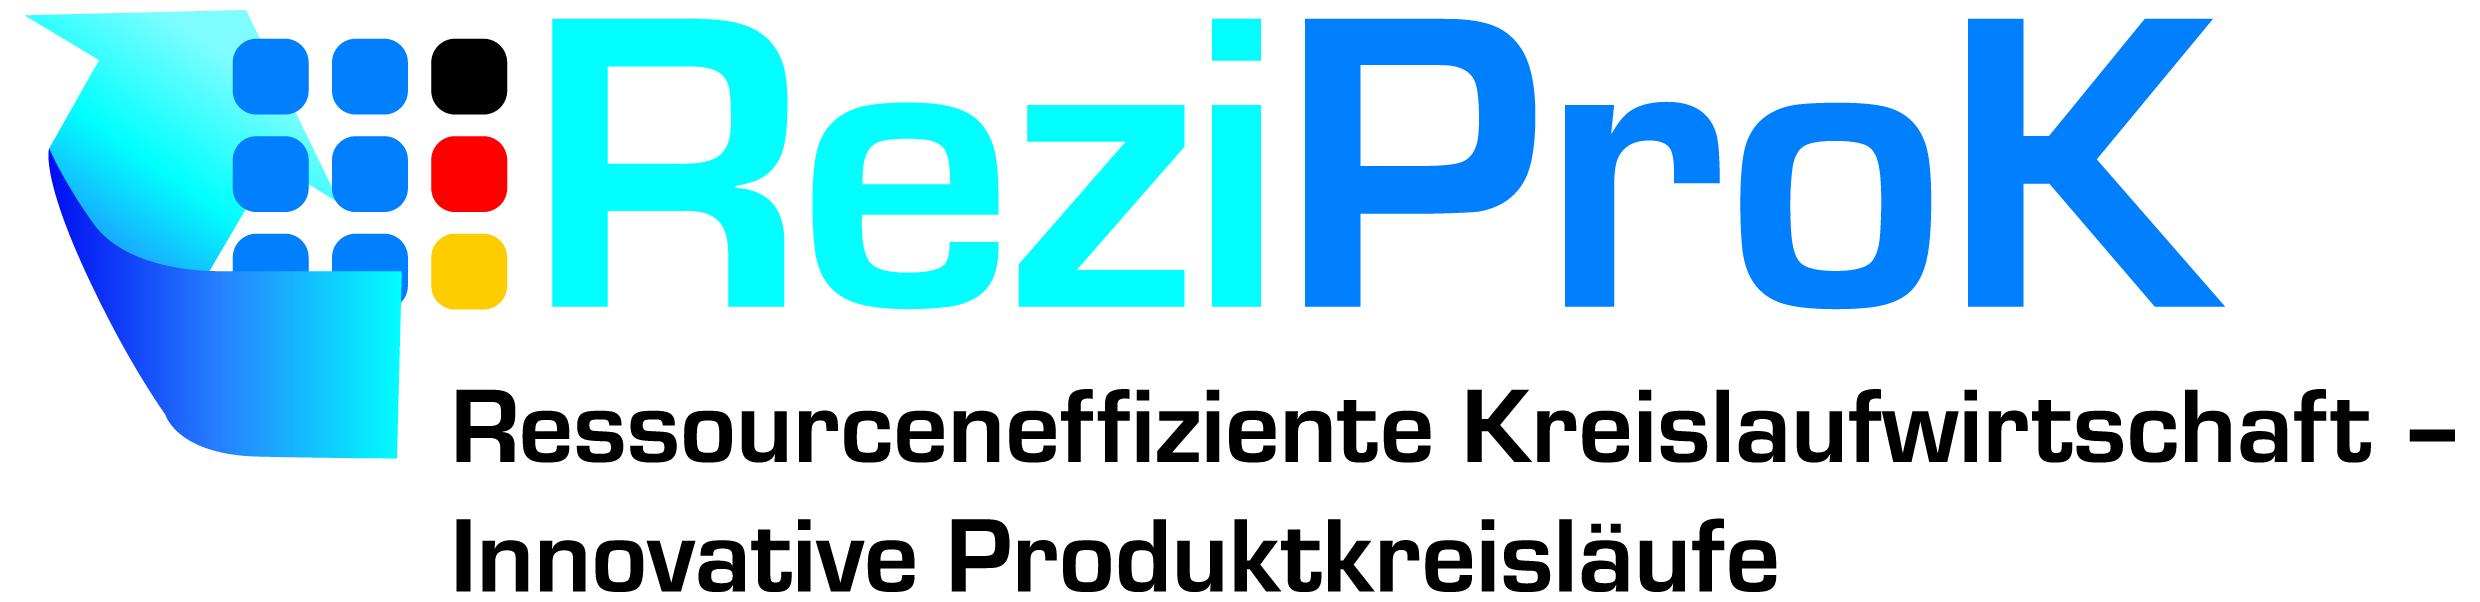 ReziProk Logo 4c HQ